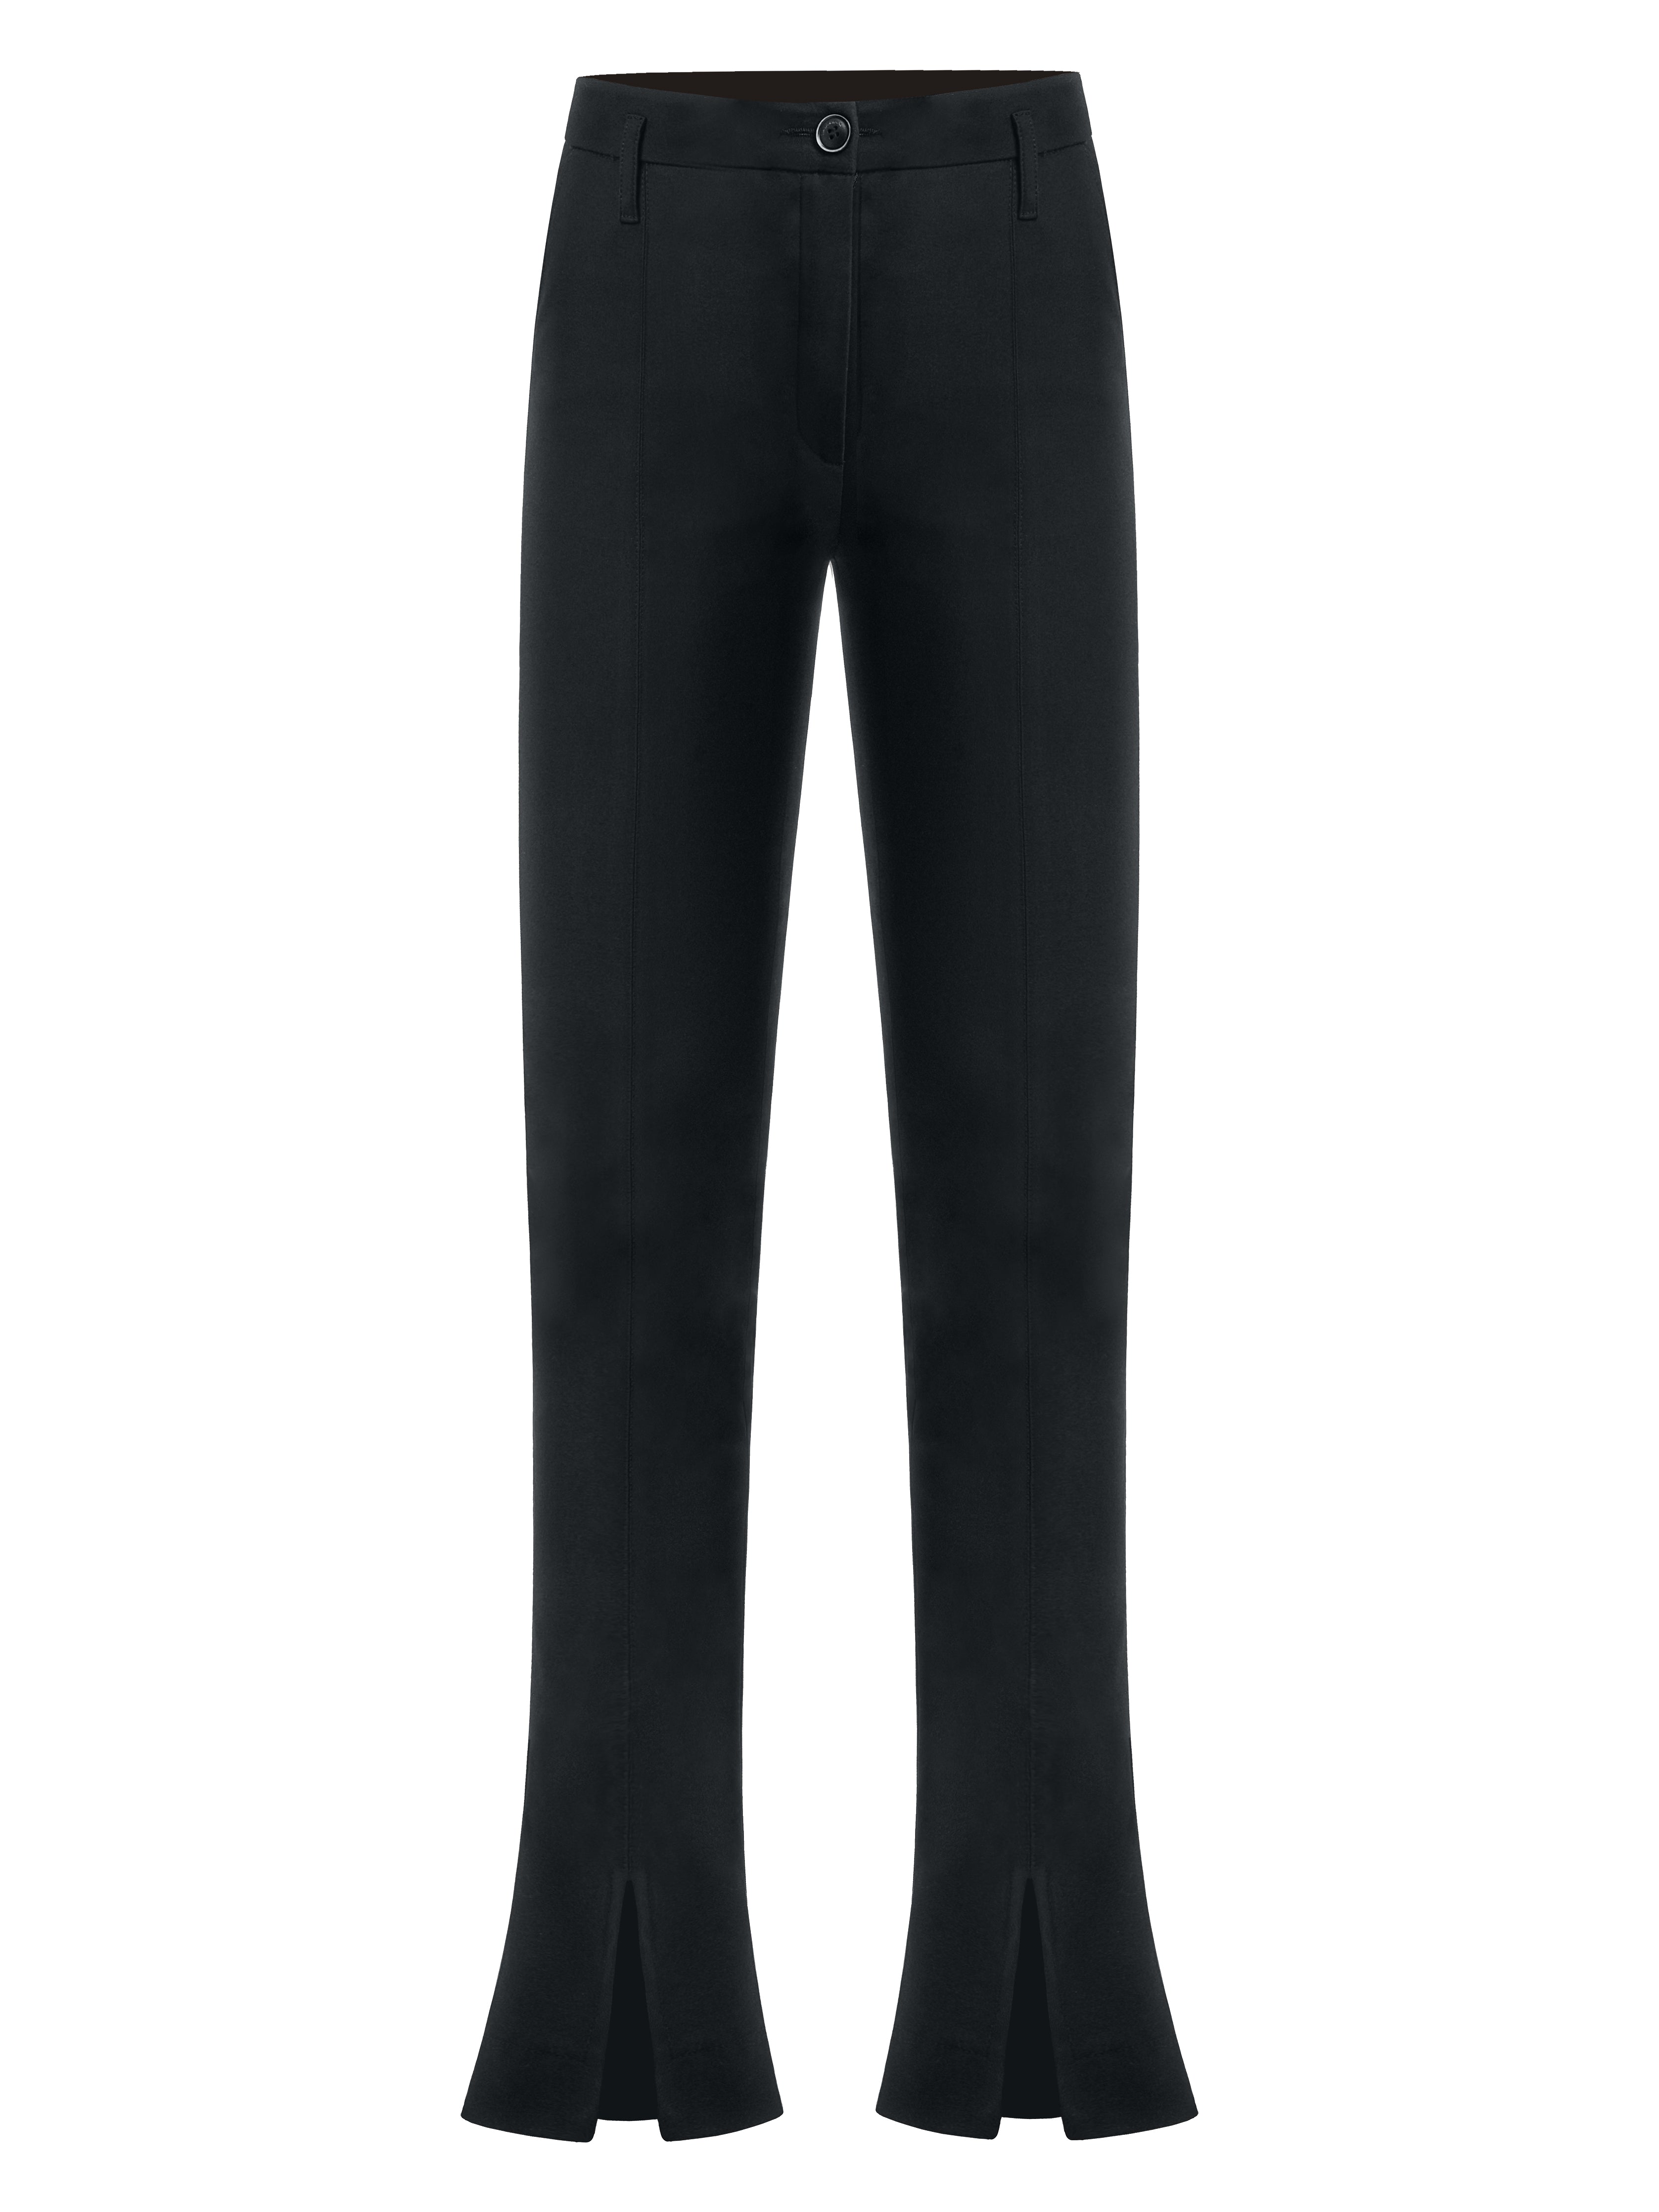 Buy Arrow Sport Navy Slim Fit Trousers for Men Online @ Tata CLiQ